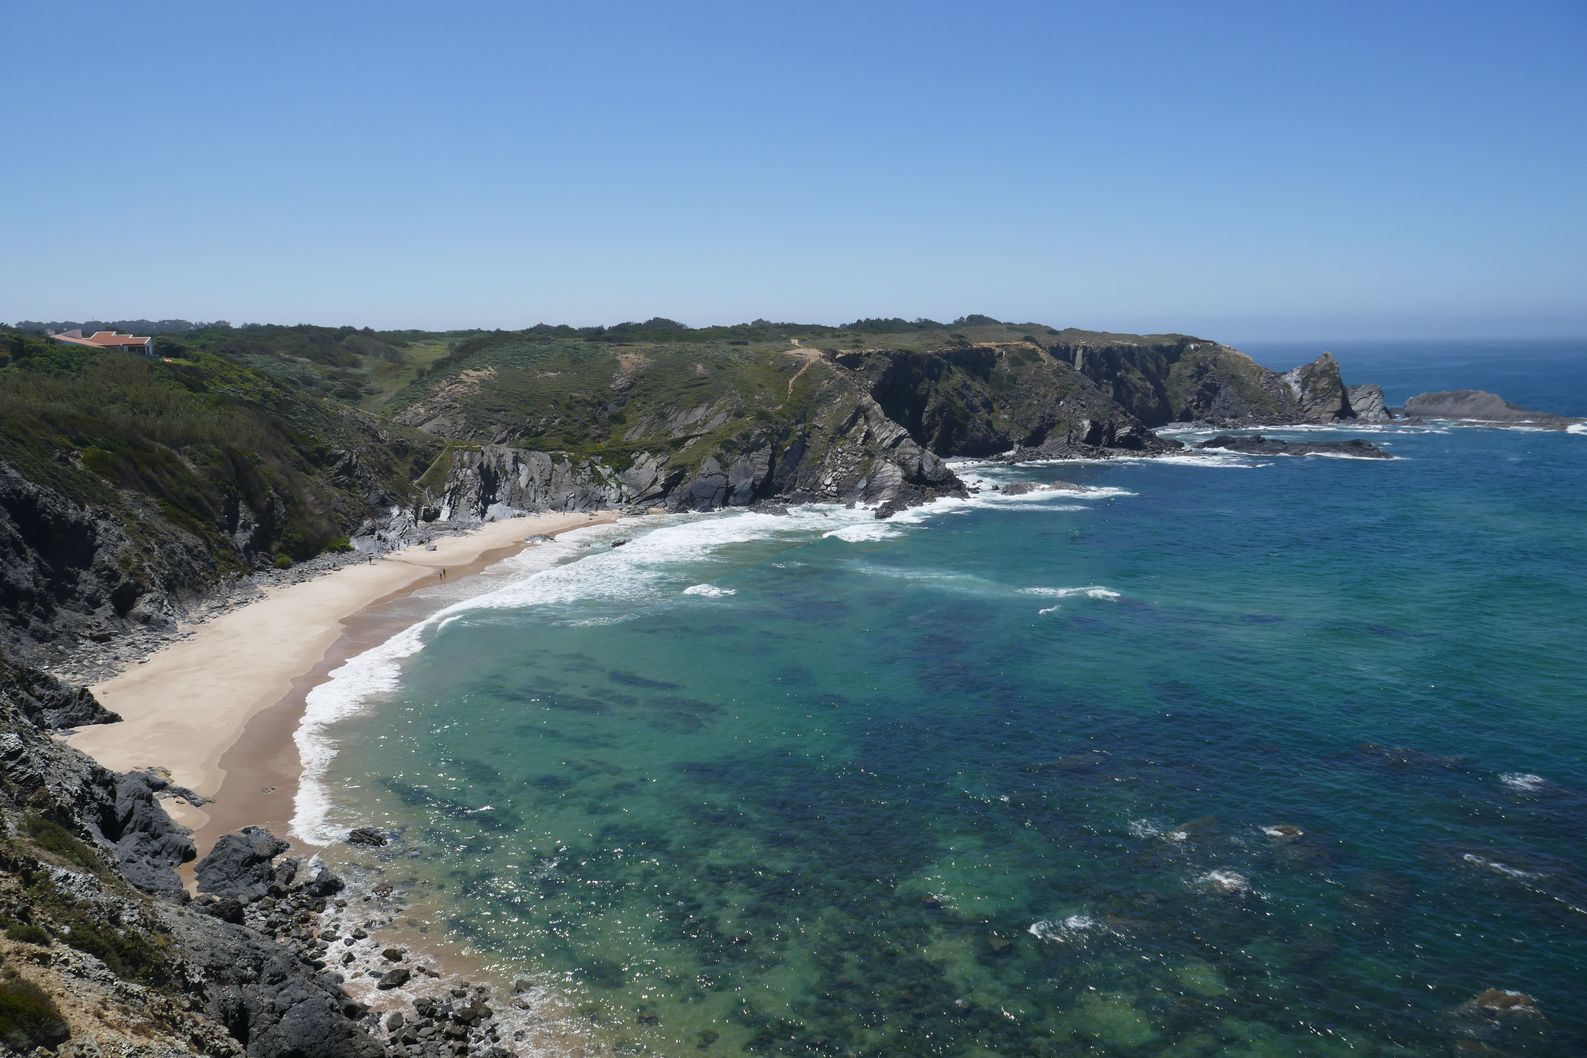 Photo de Praia da Amalia situé dans une zone naturelle